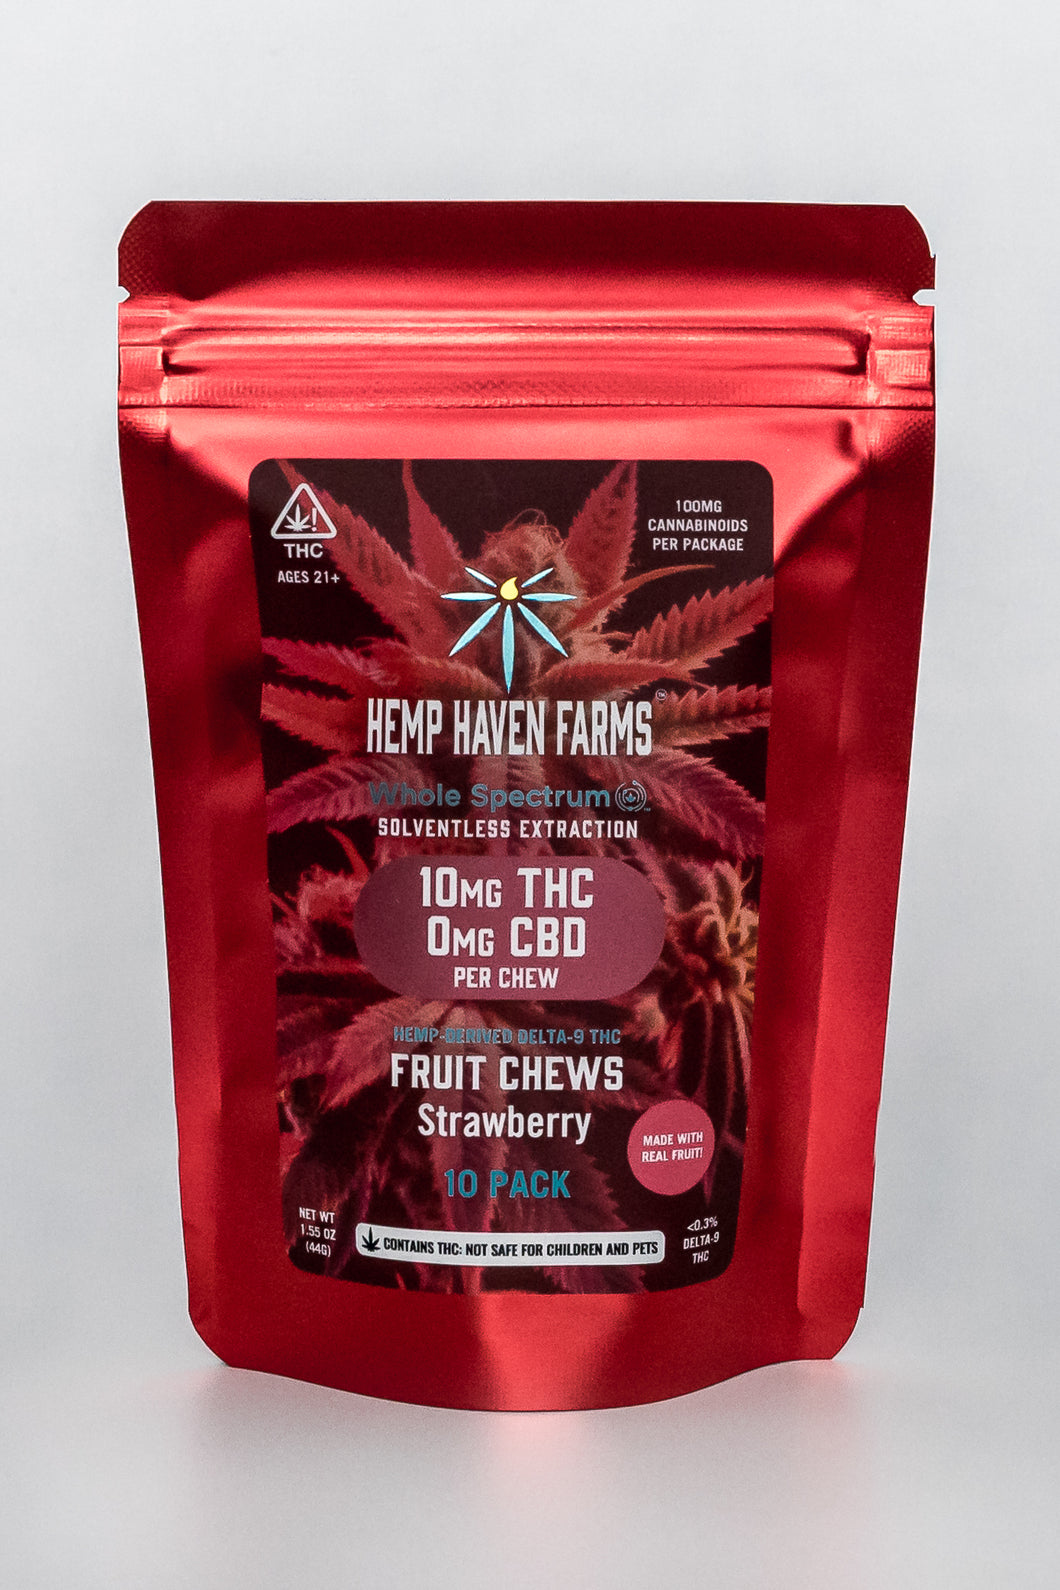 10mg THC, 0mg CBD Vegan Fruit Chew 10 pack - Chemical free, Solvent free, CO2 free